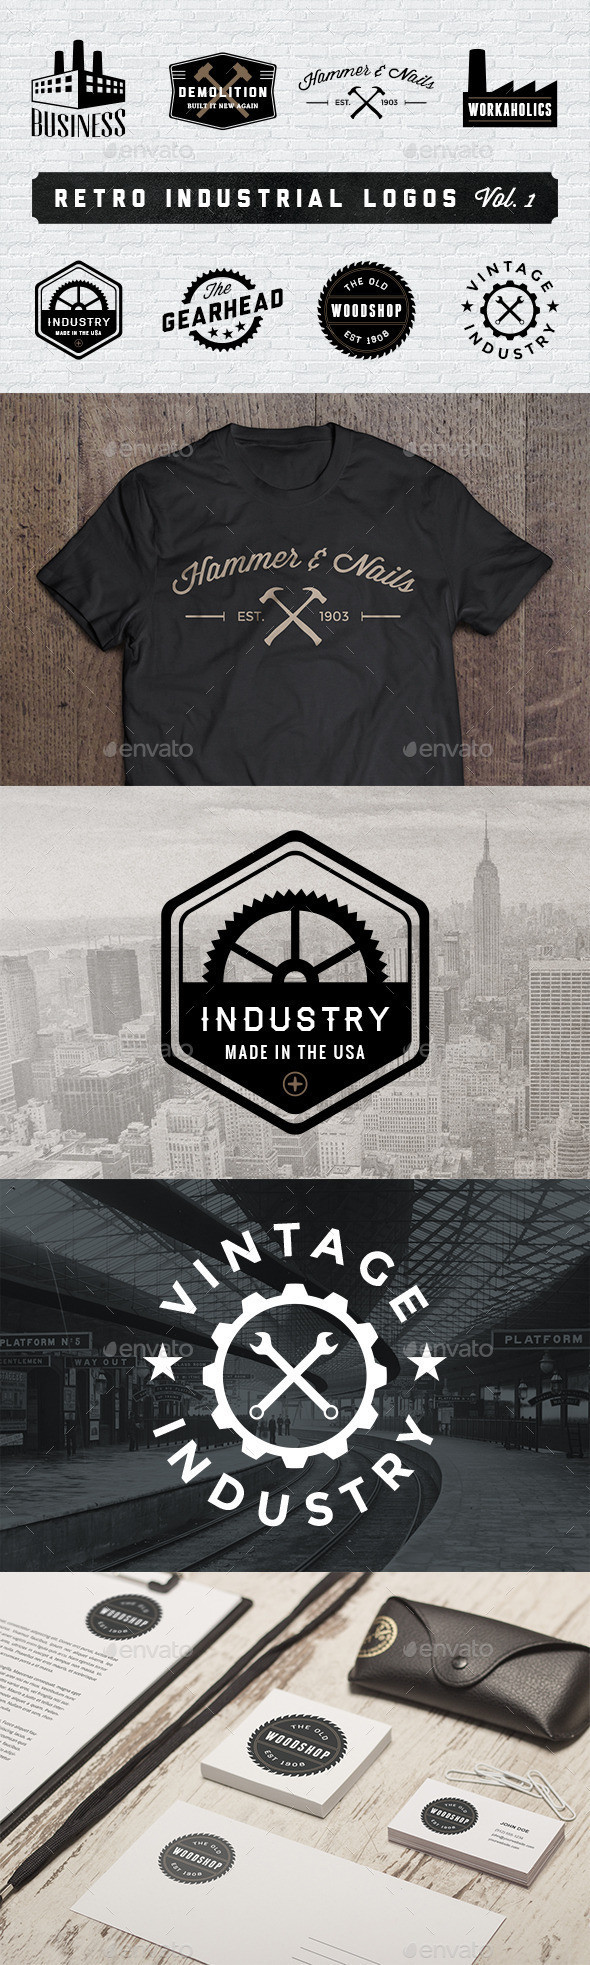 Industrial logos mockups